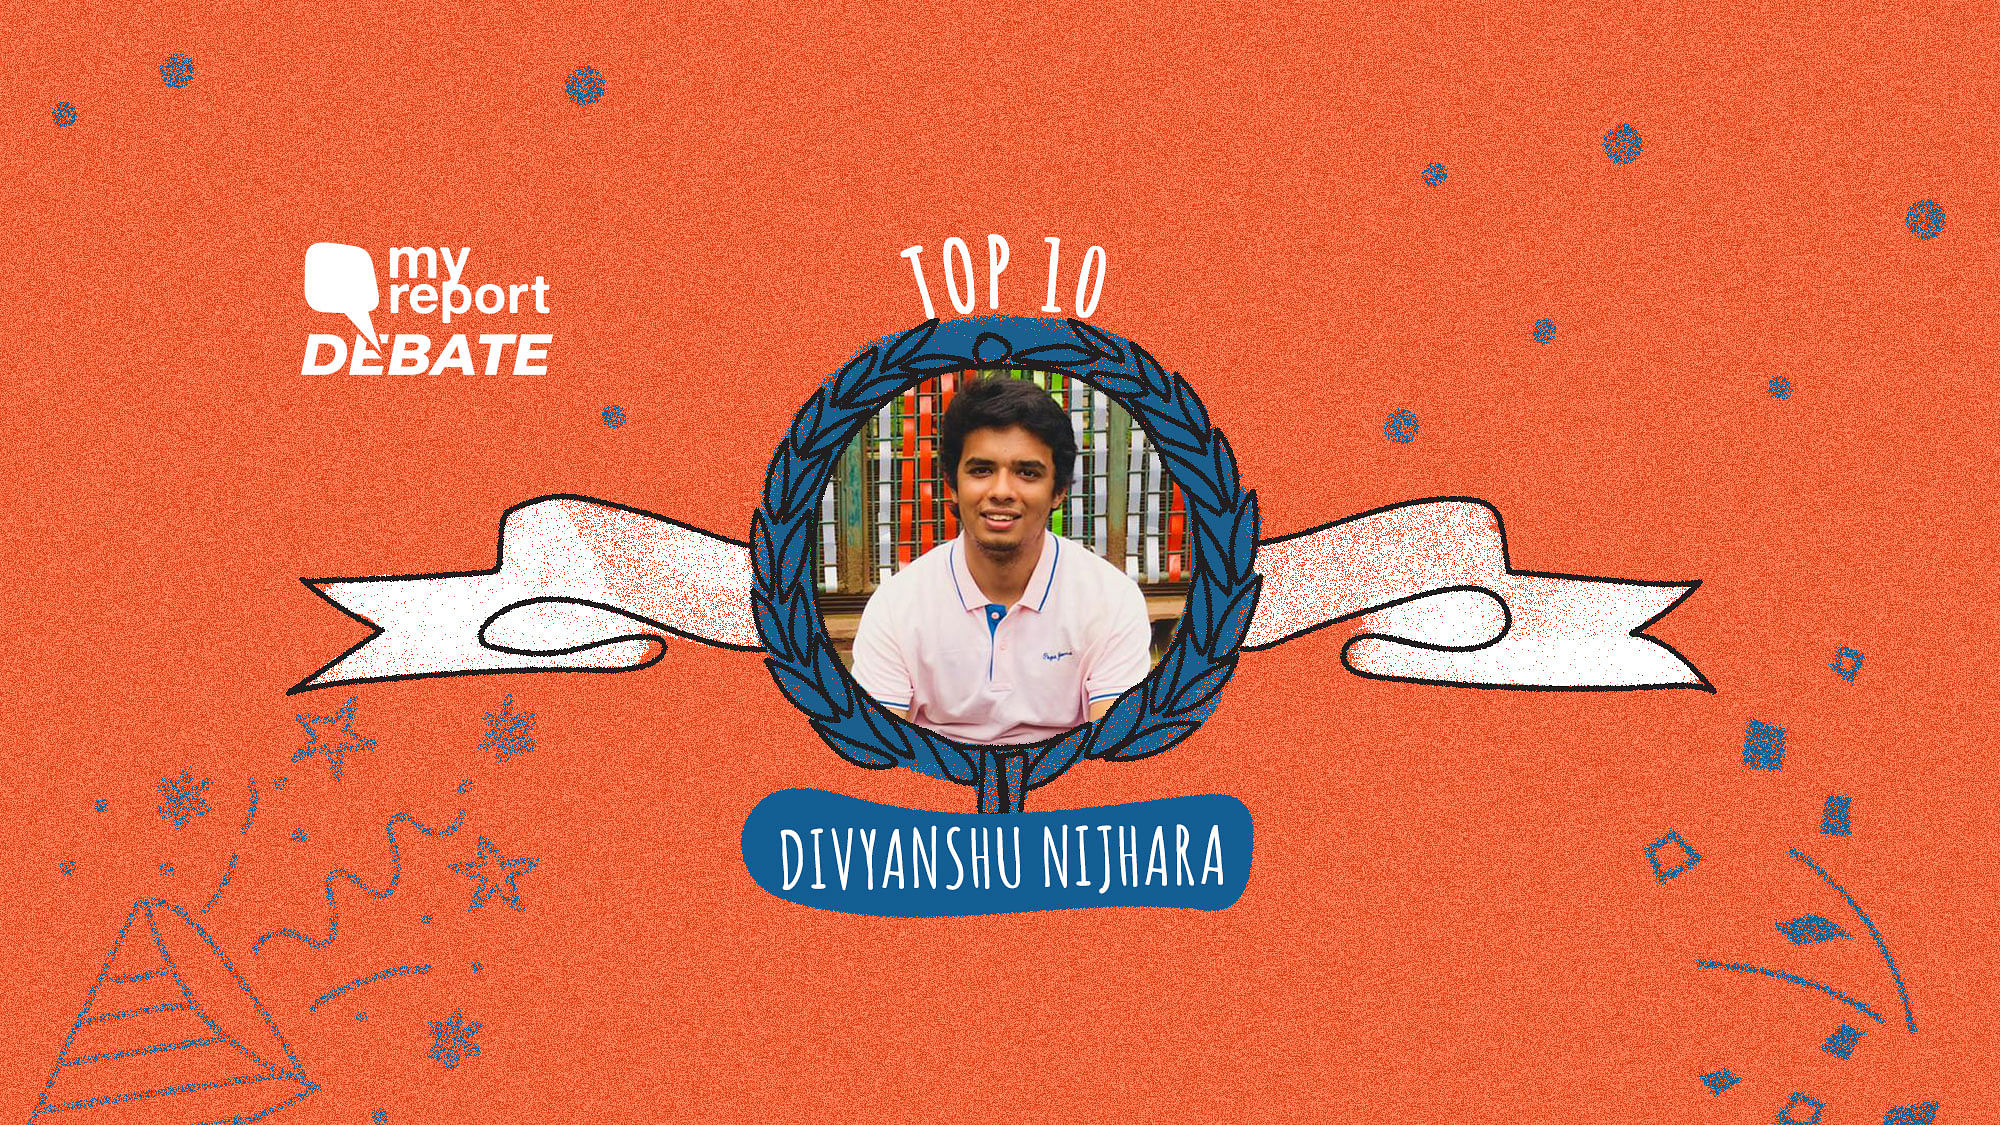 Divyanshu Nijhara’s essay is among the Top 10 of the My Report Debate.&nbsp;